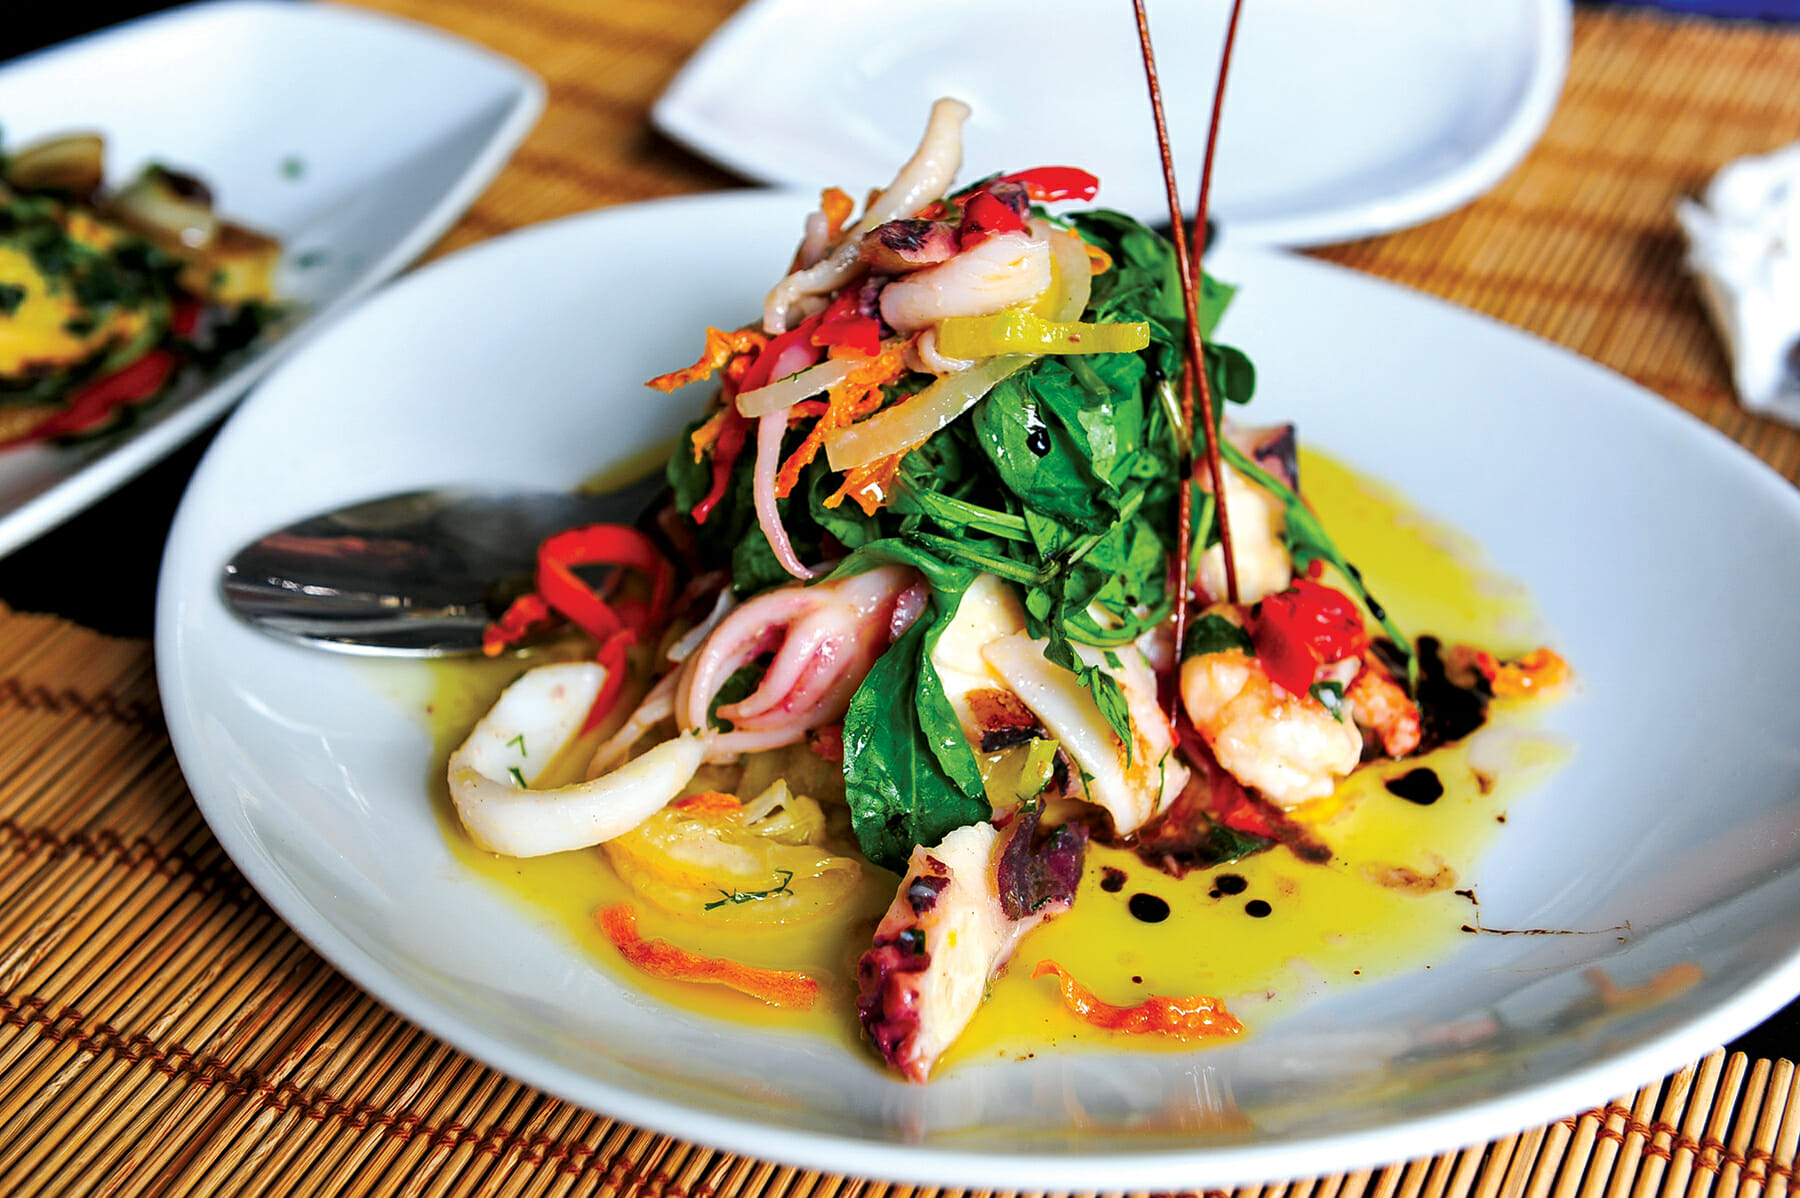 An Adriatic seafood salad (squid, octopus, shrimp, mussels) at Artigiano restaurant in Tirana's fashionable Ish-Blloku neighborhood. / Courtesy Merlin Bakus.